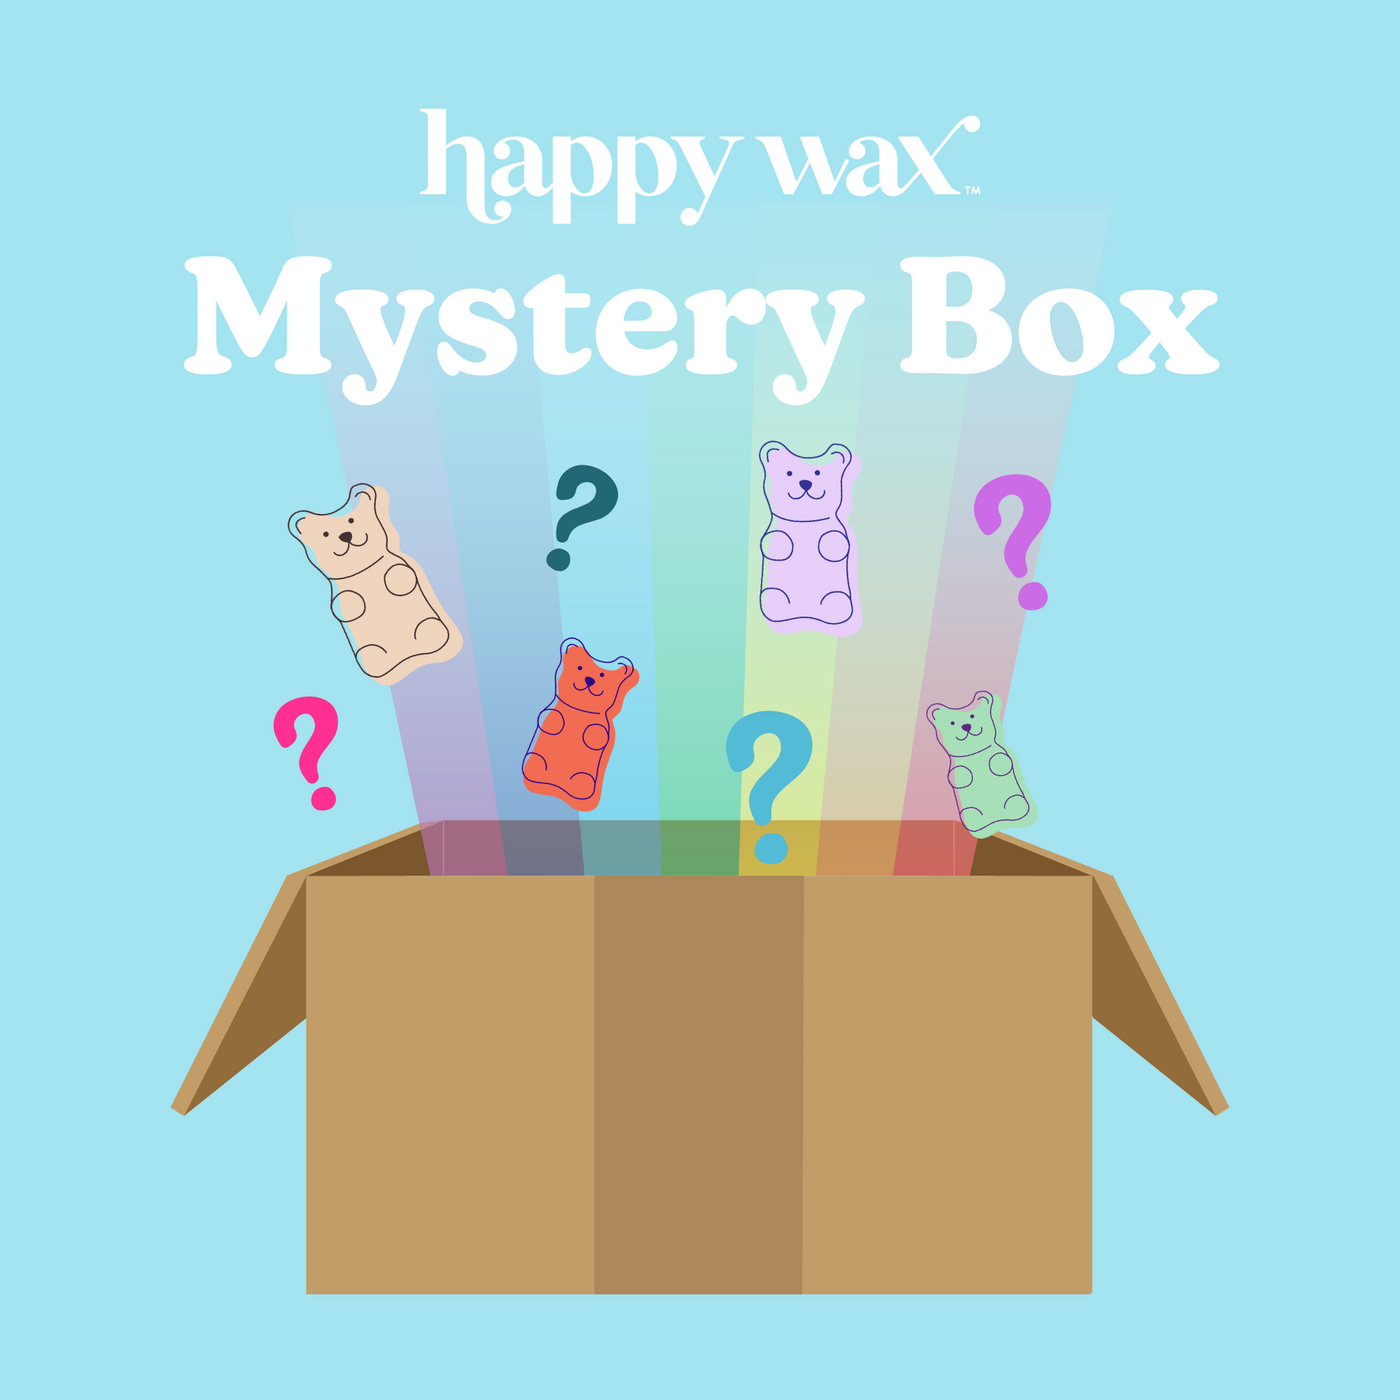 Mystery Box of Happy Wax Goodies